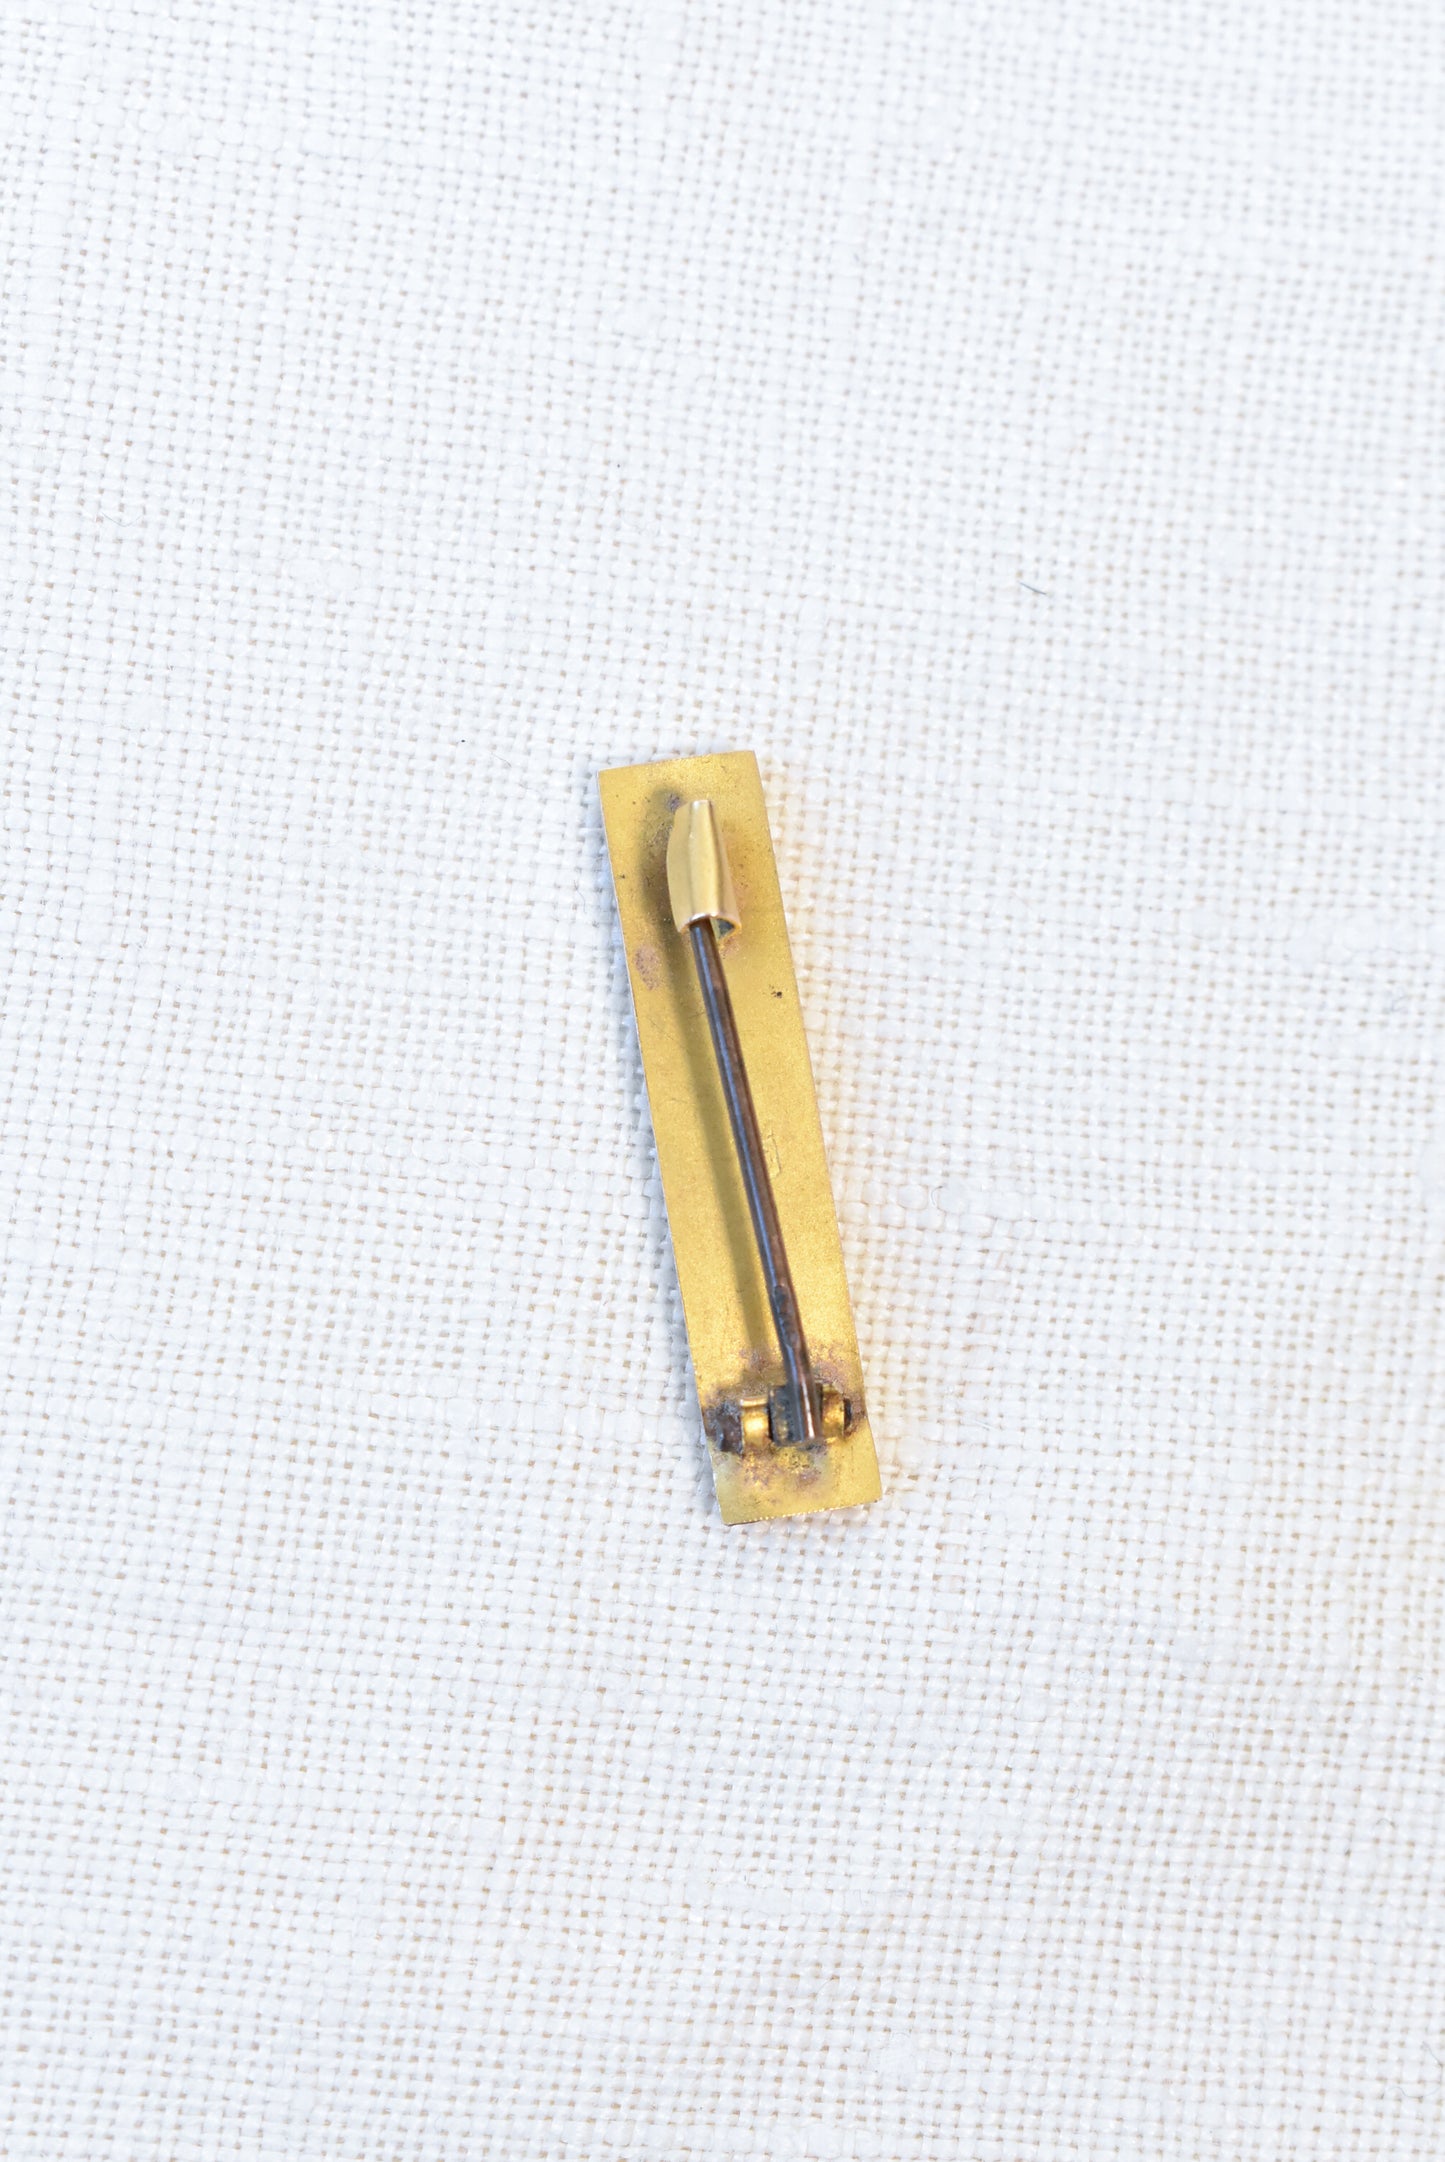 Vintage gold 'Baby' pin